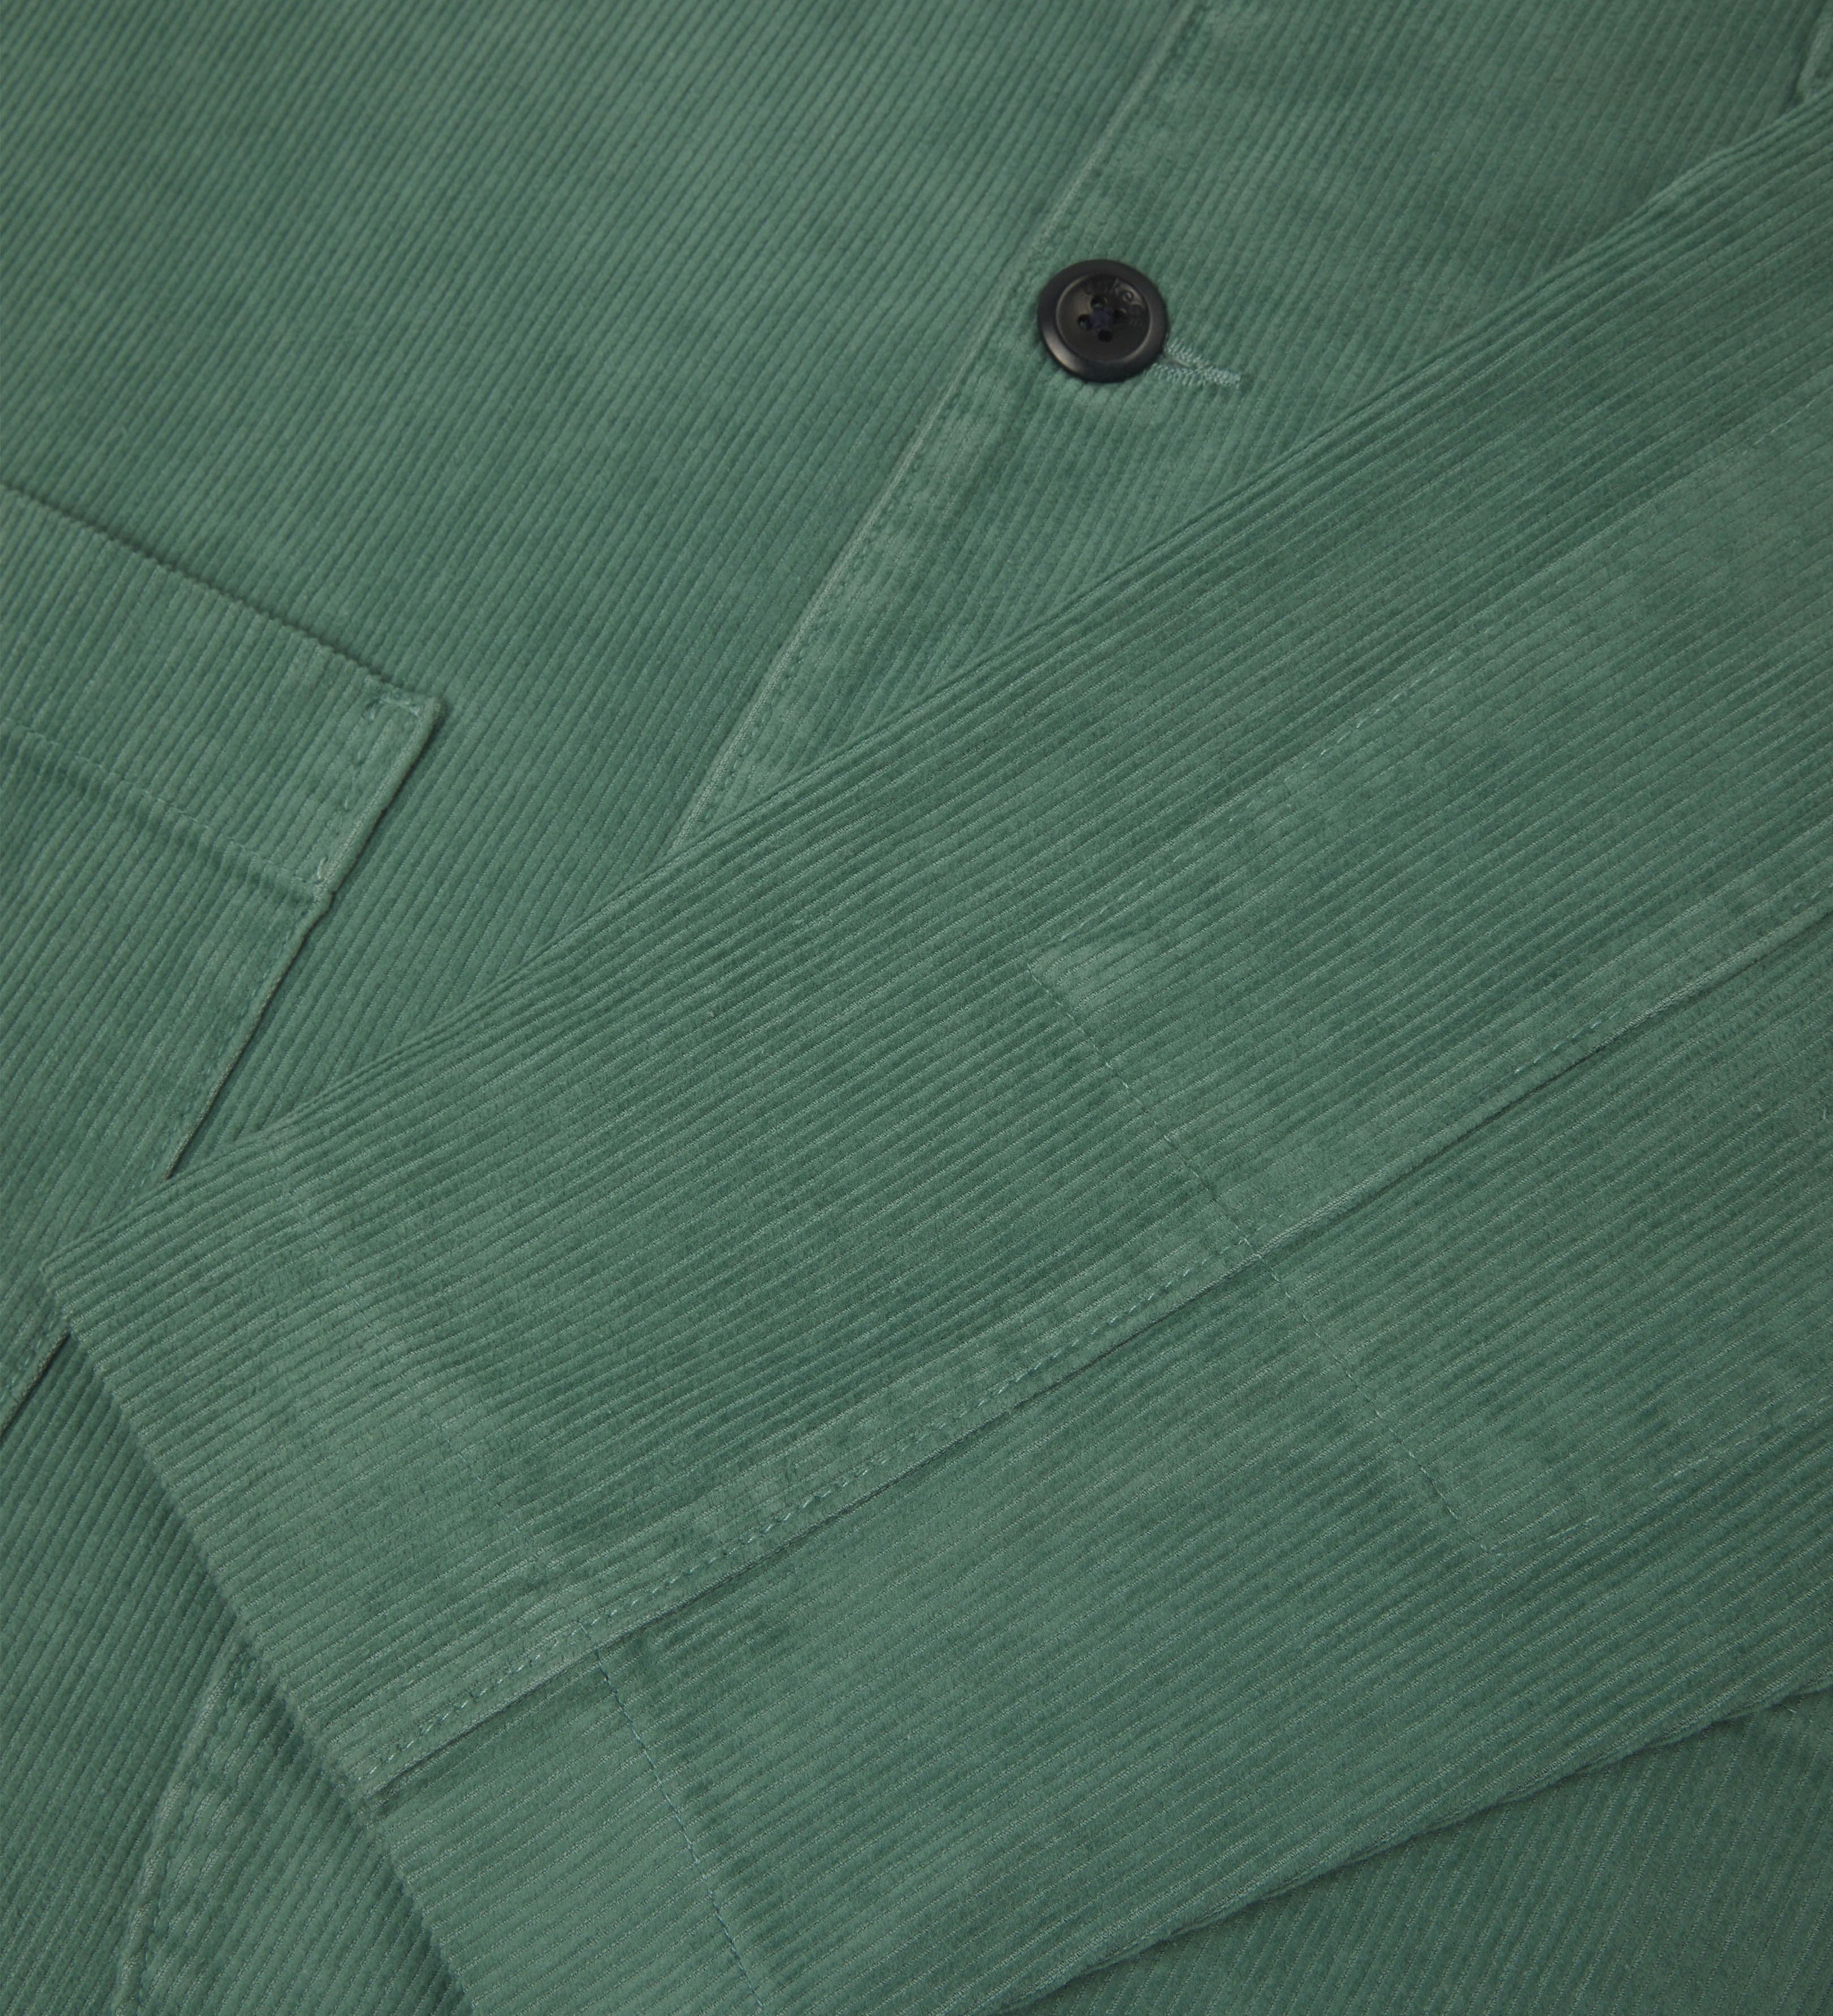 Front close view of eucalyptus-green corduroy blazer showing cuff detail.